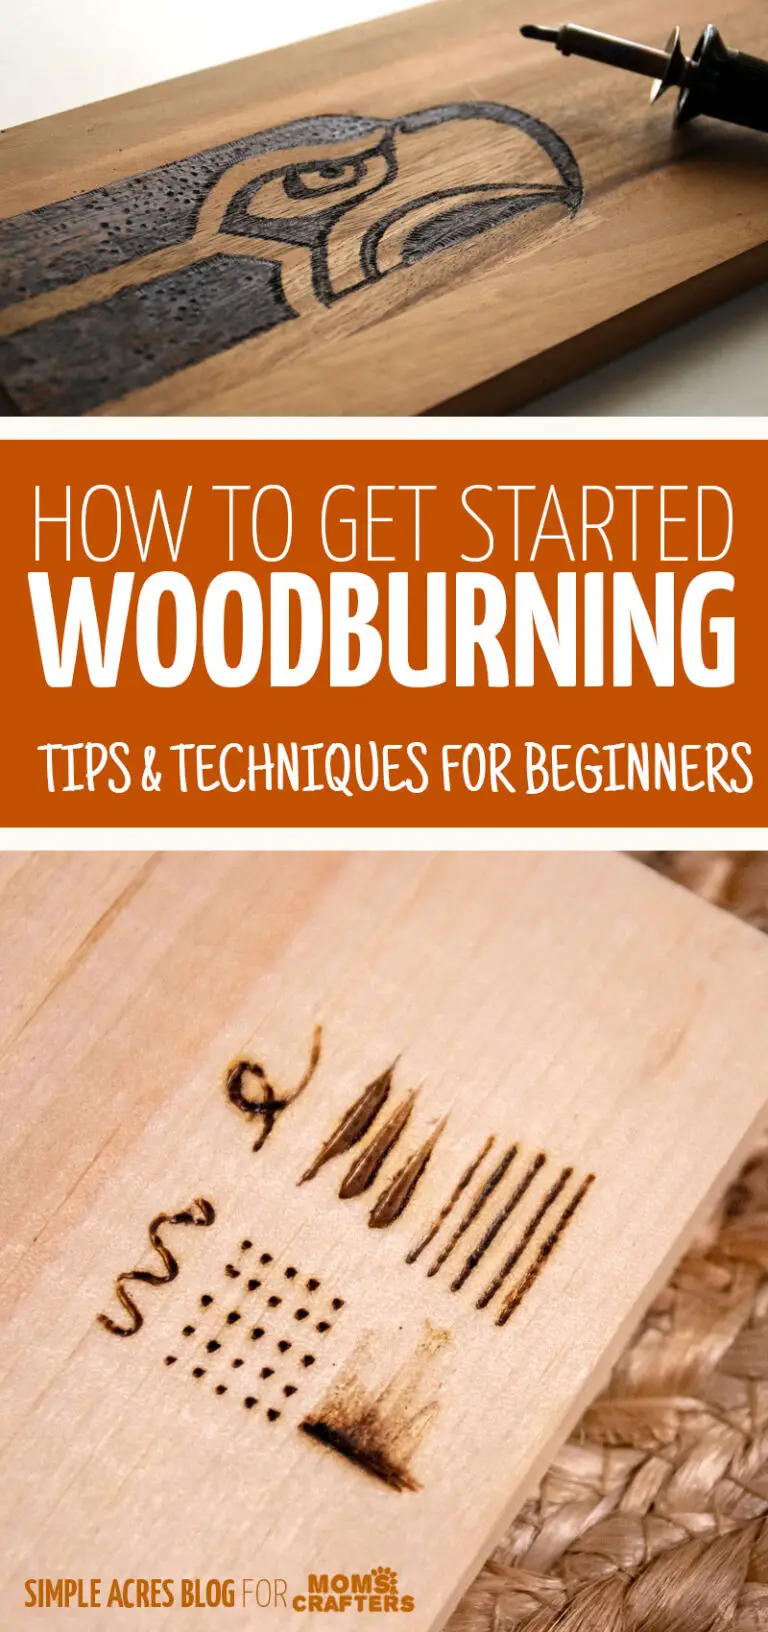 Wood Burning Tips for Beginners